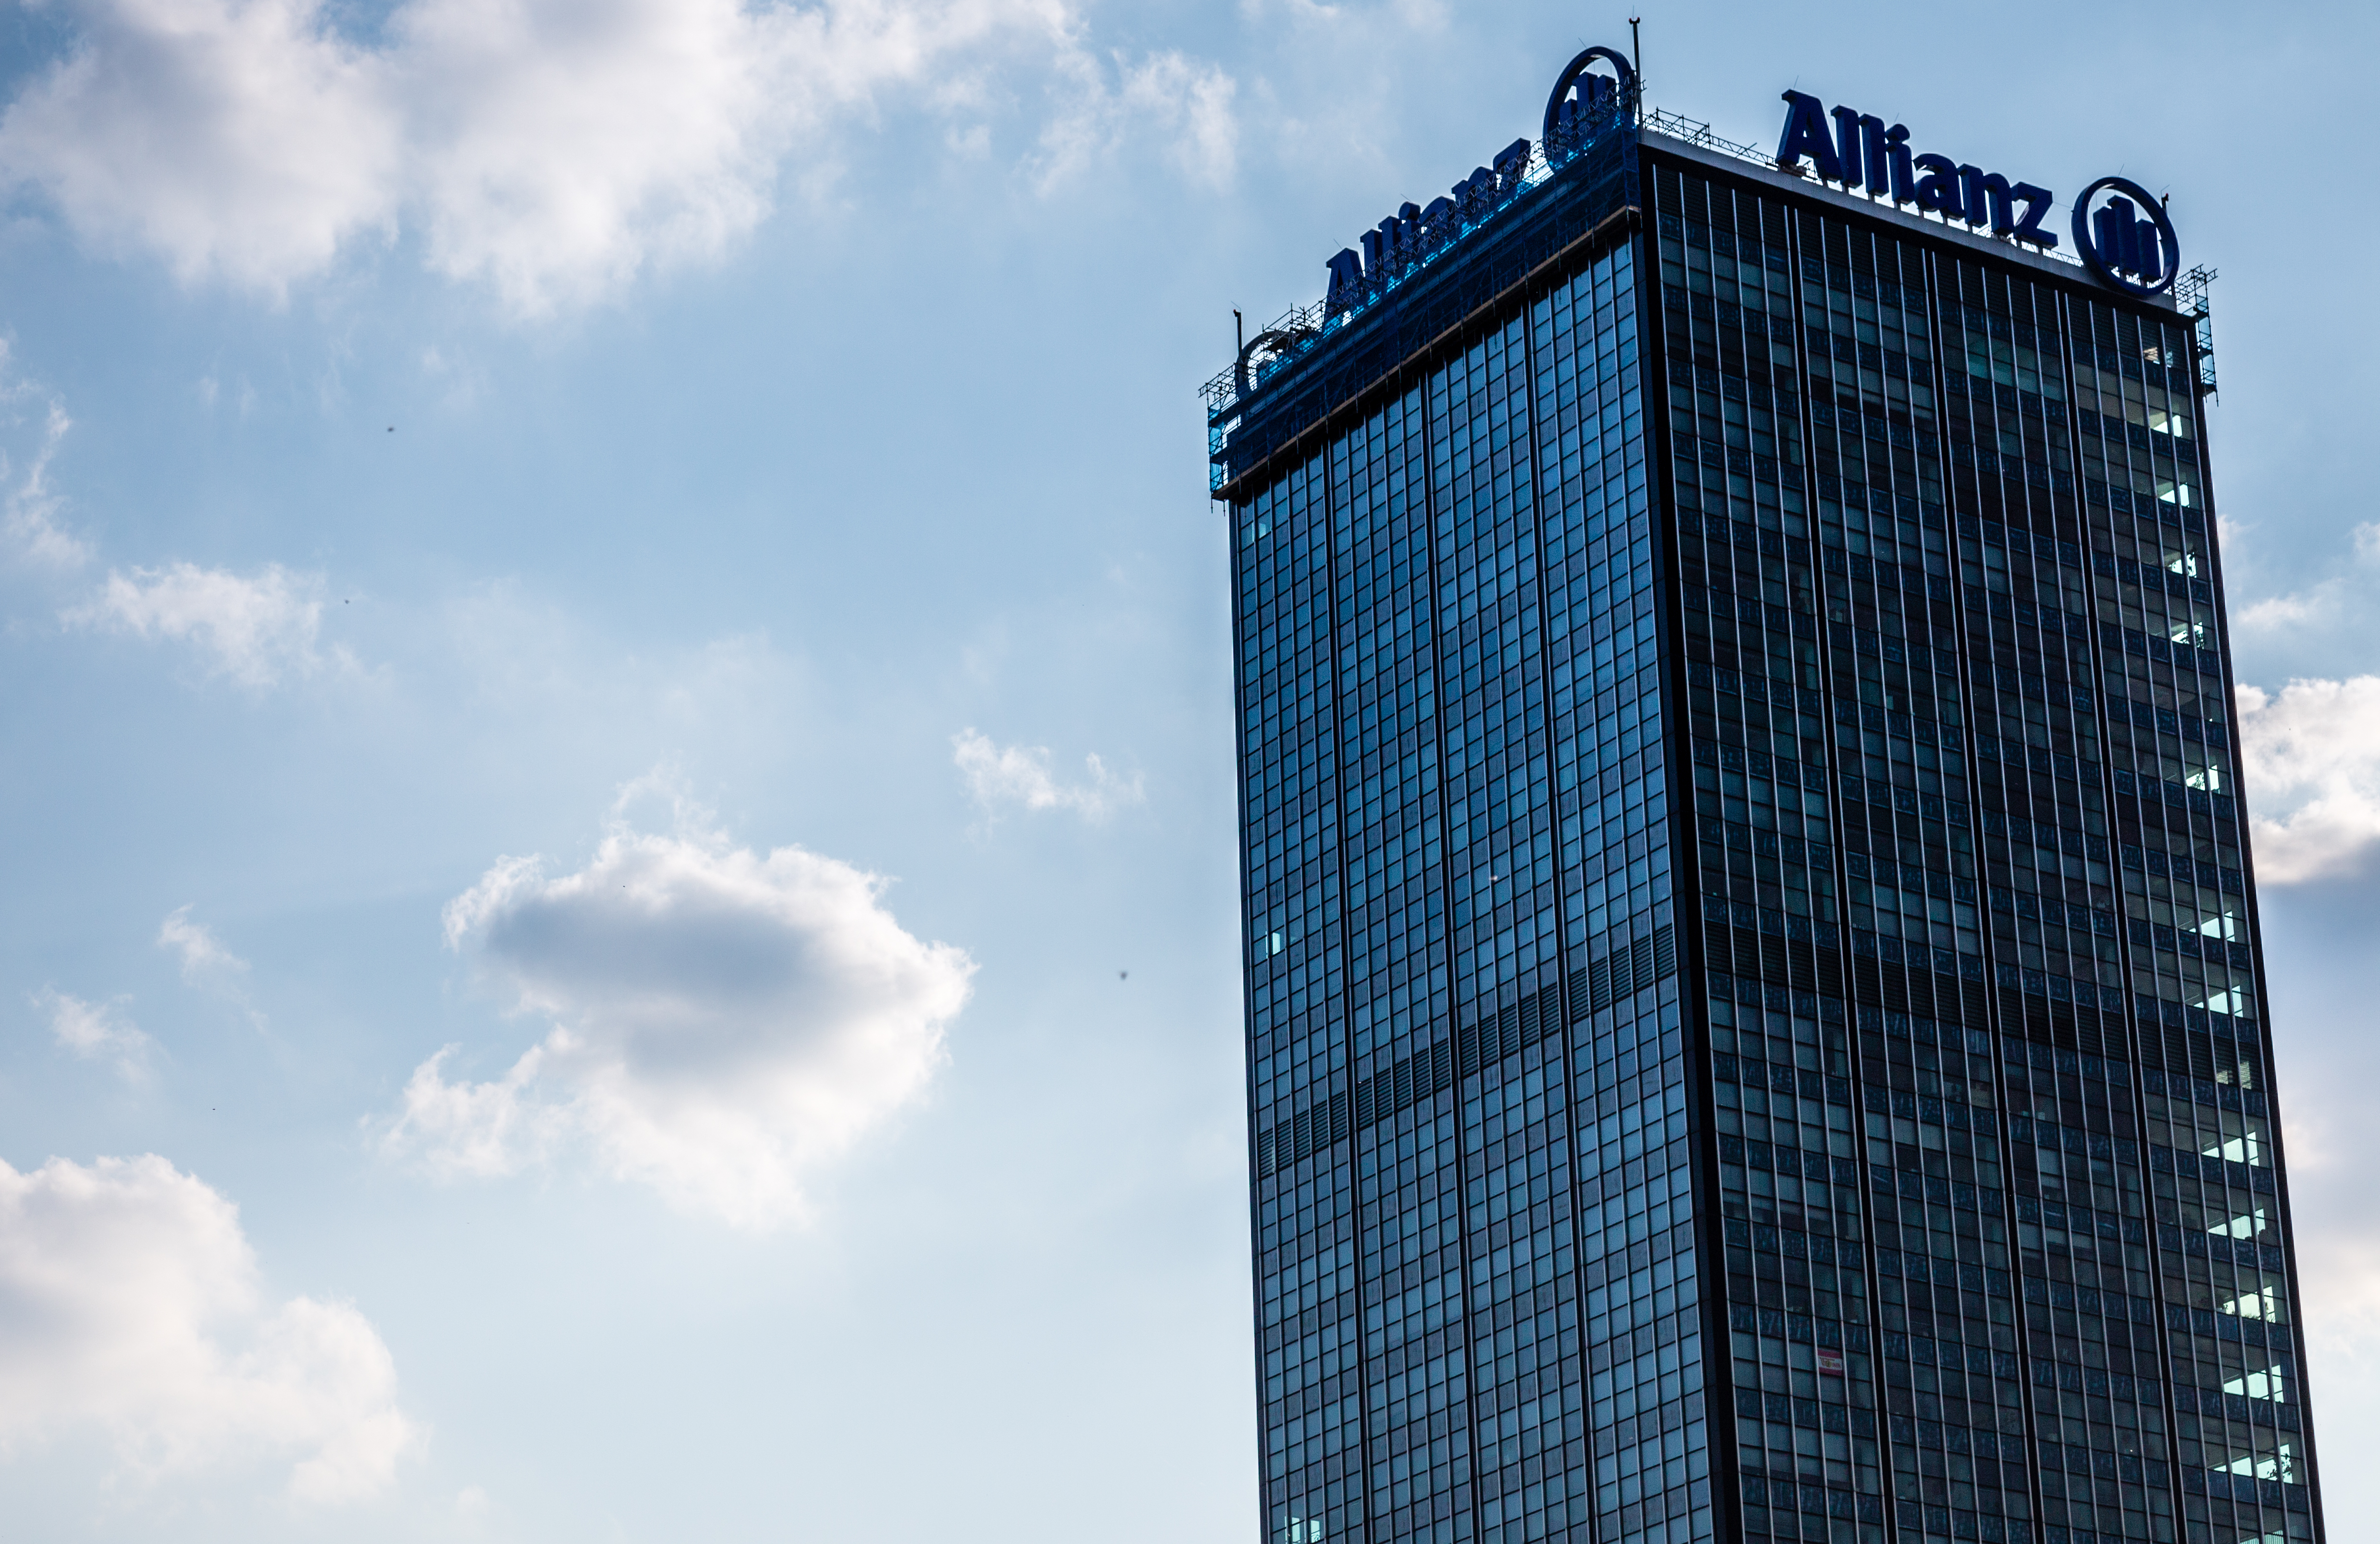 Allianz insurance building in Berlin, Germany. (Credit: Daniel Foster / Flickr)